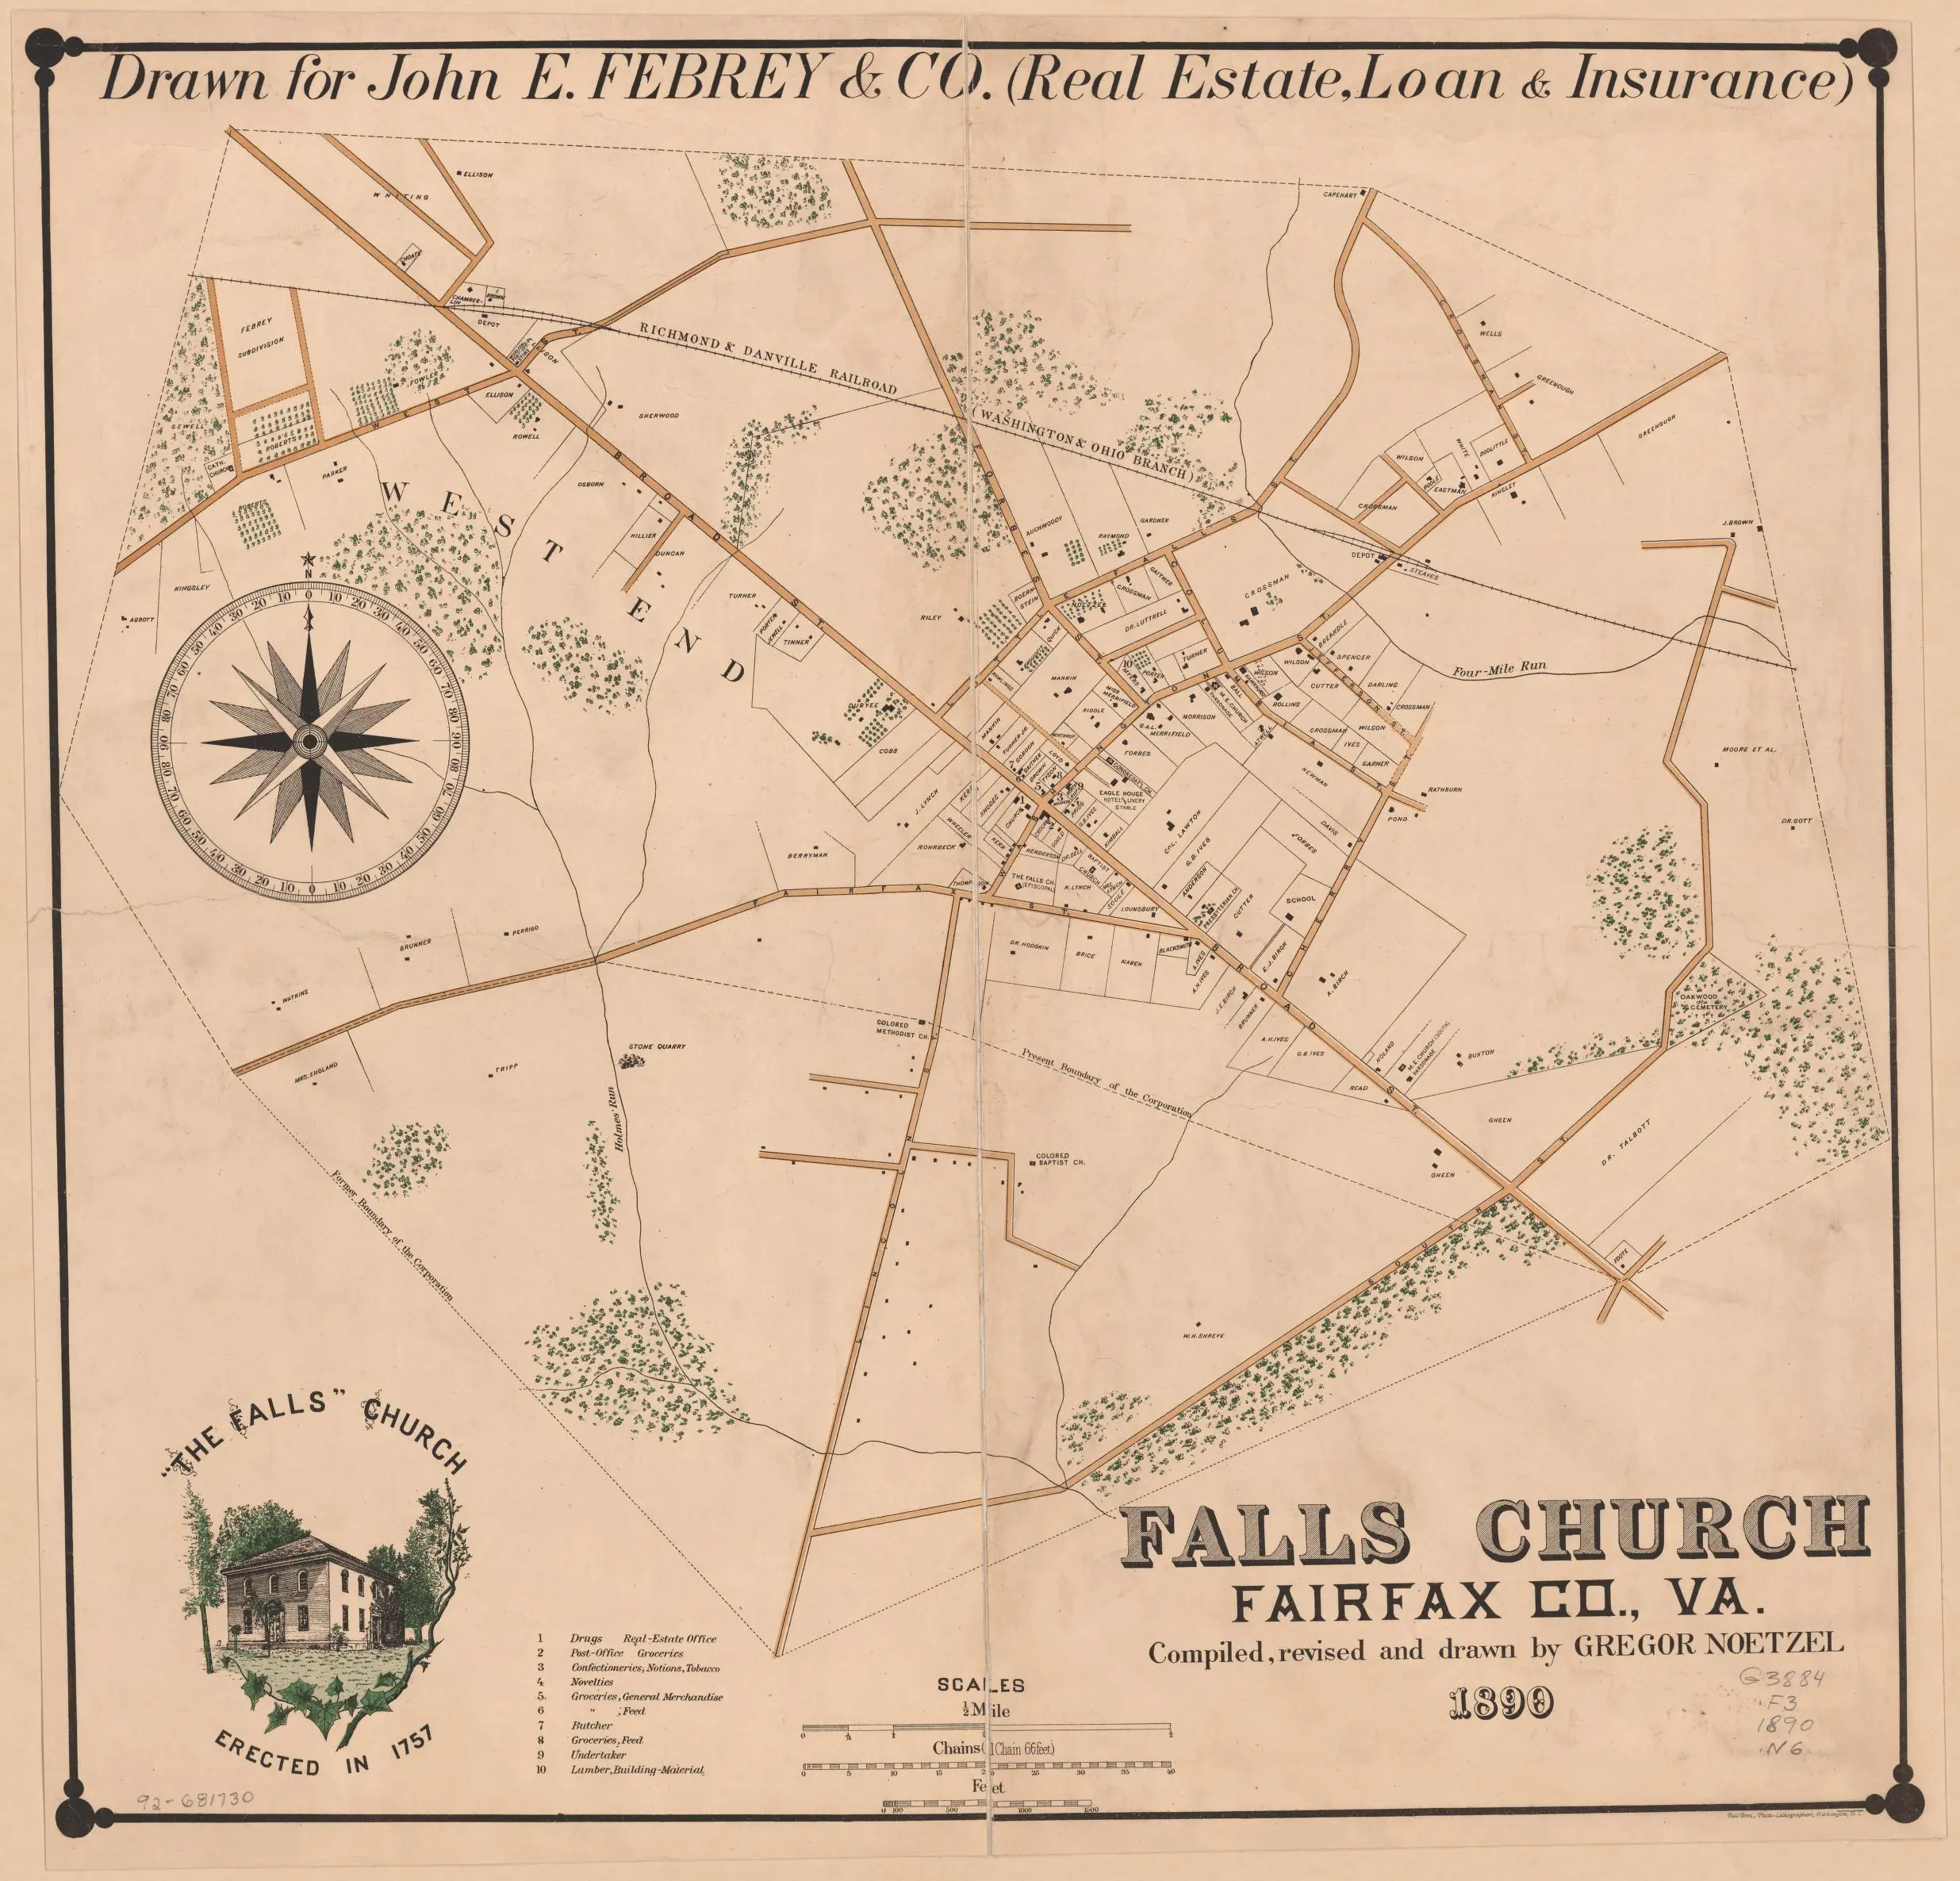 1890 map of Falls Church, Fairfax Co., Va. by G. Noetzel